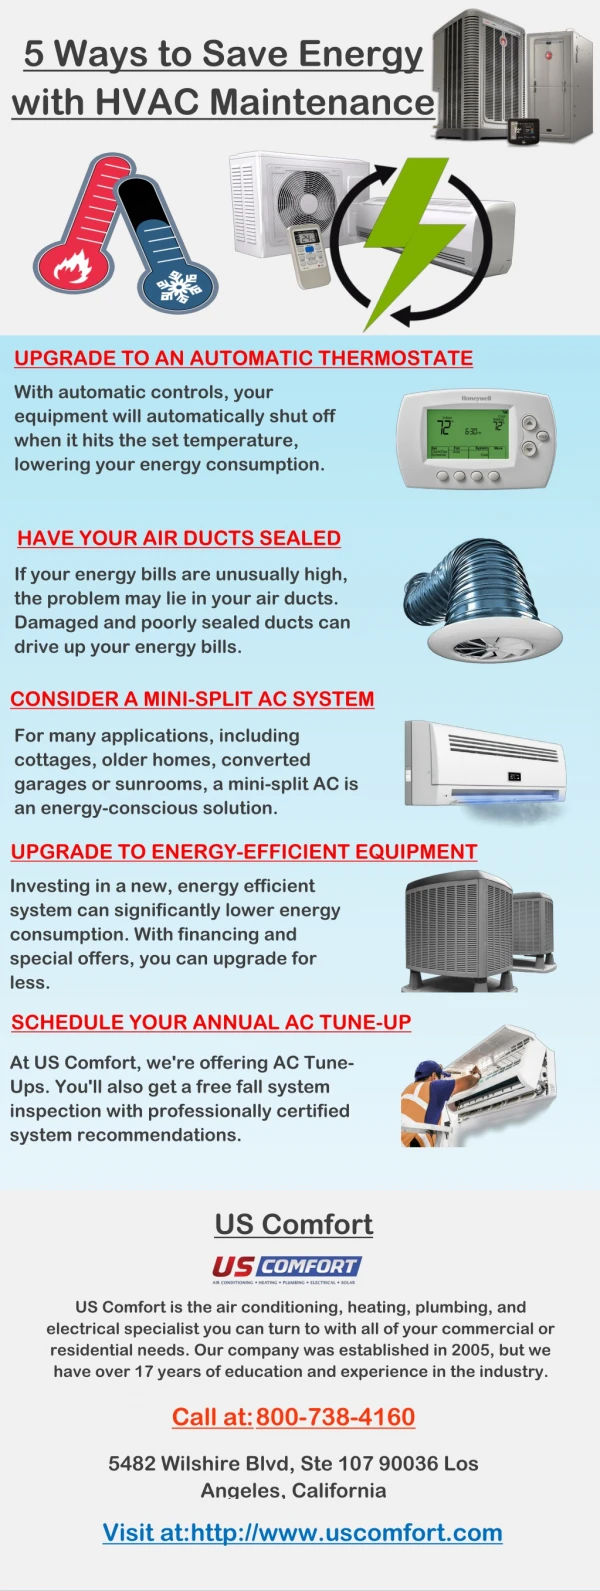 5 Ways to Save Energy with HVAC Maintenance